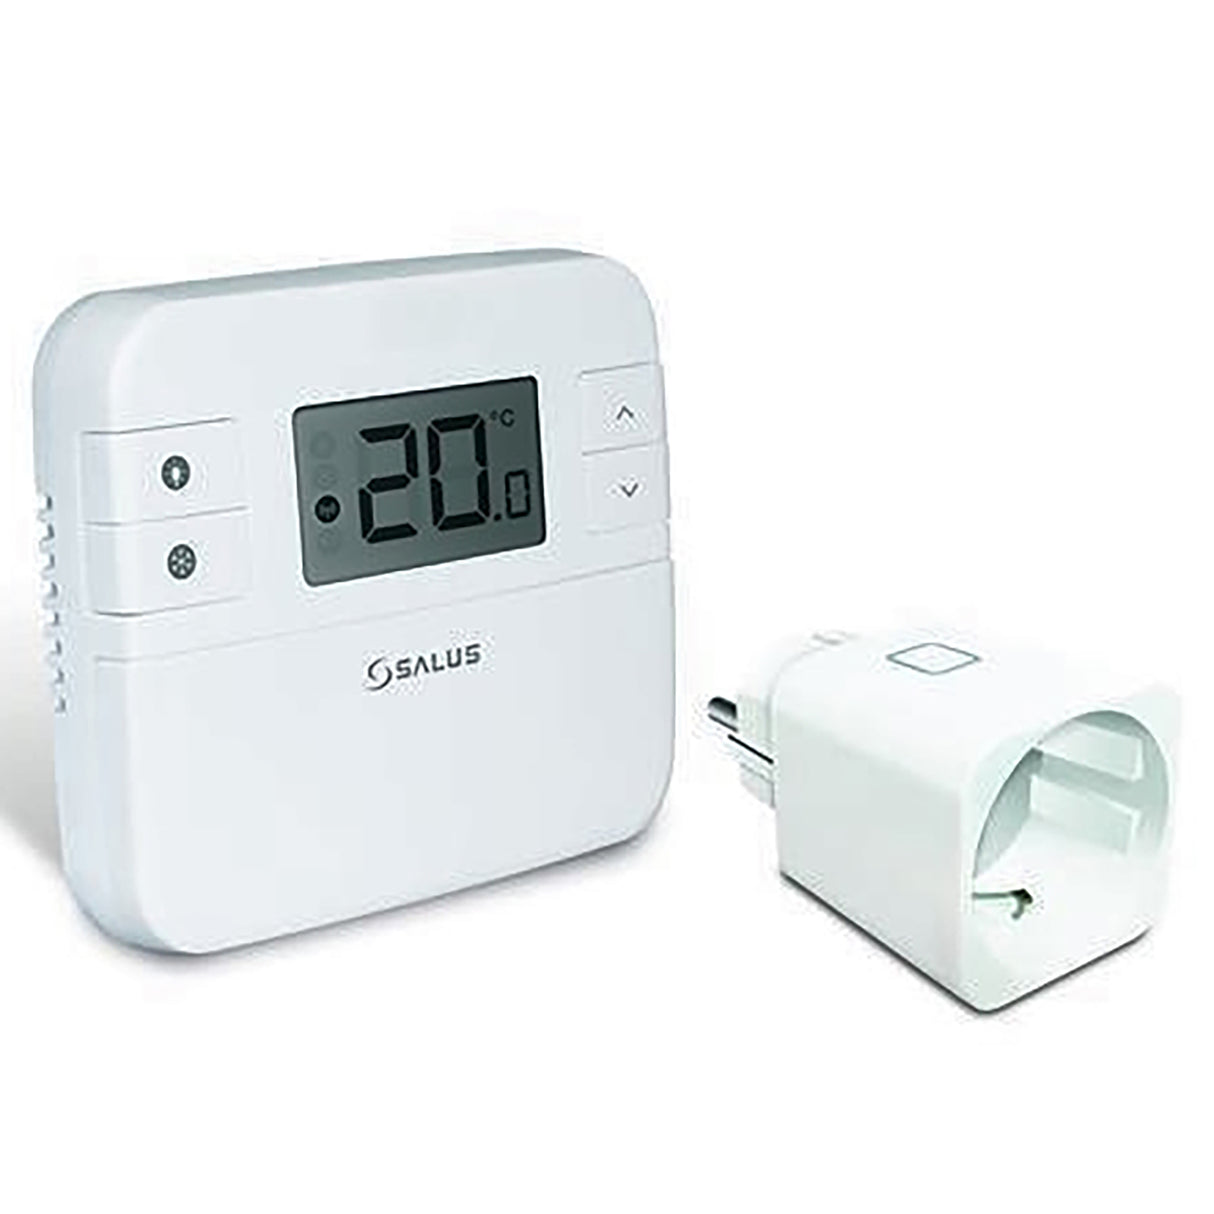 Thermostat-Infrarotheizung Lely Melkroboter